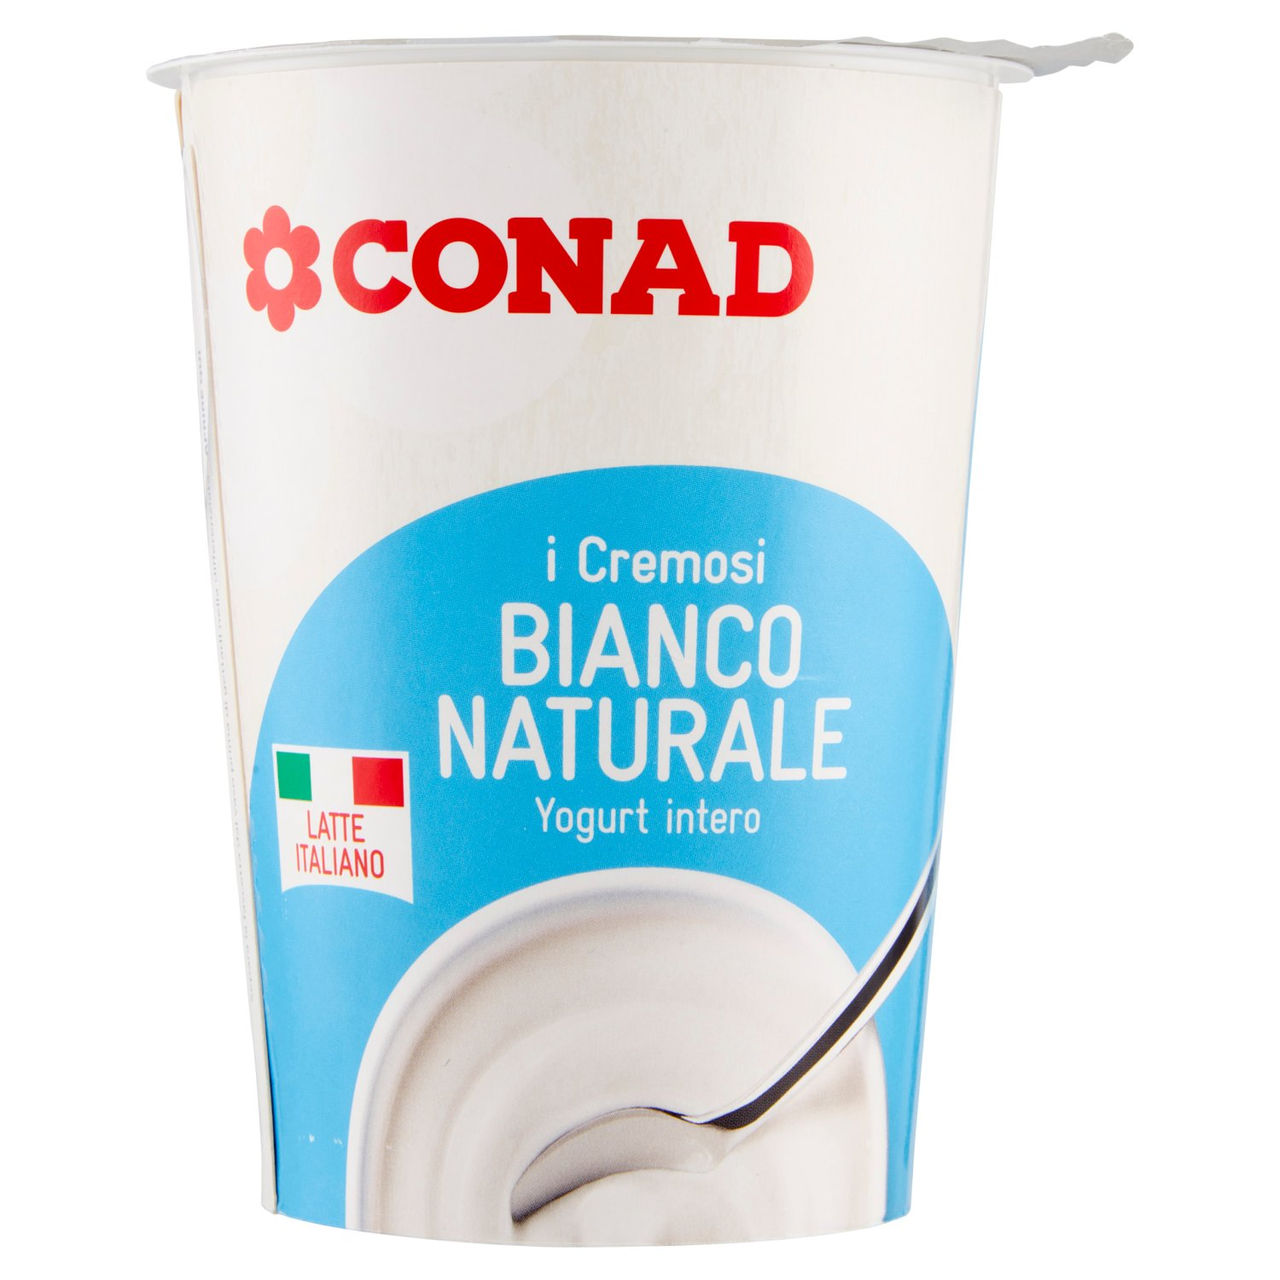 Yogurt Intero Bianco Naturale 500g i Cremosi Conad